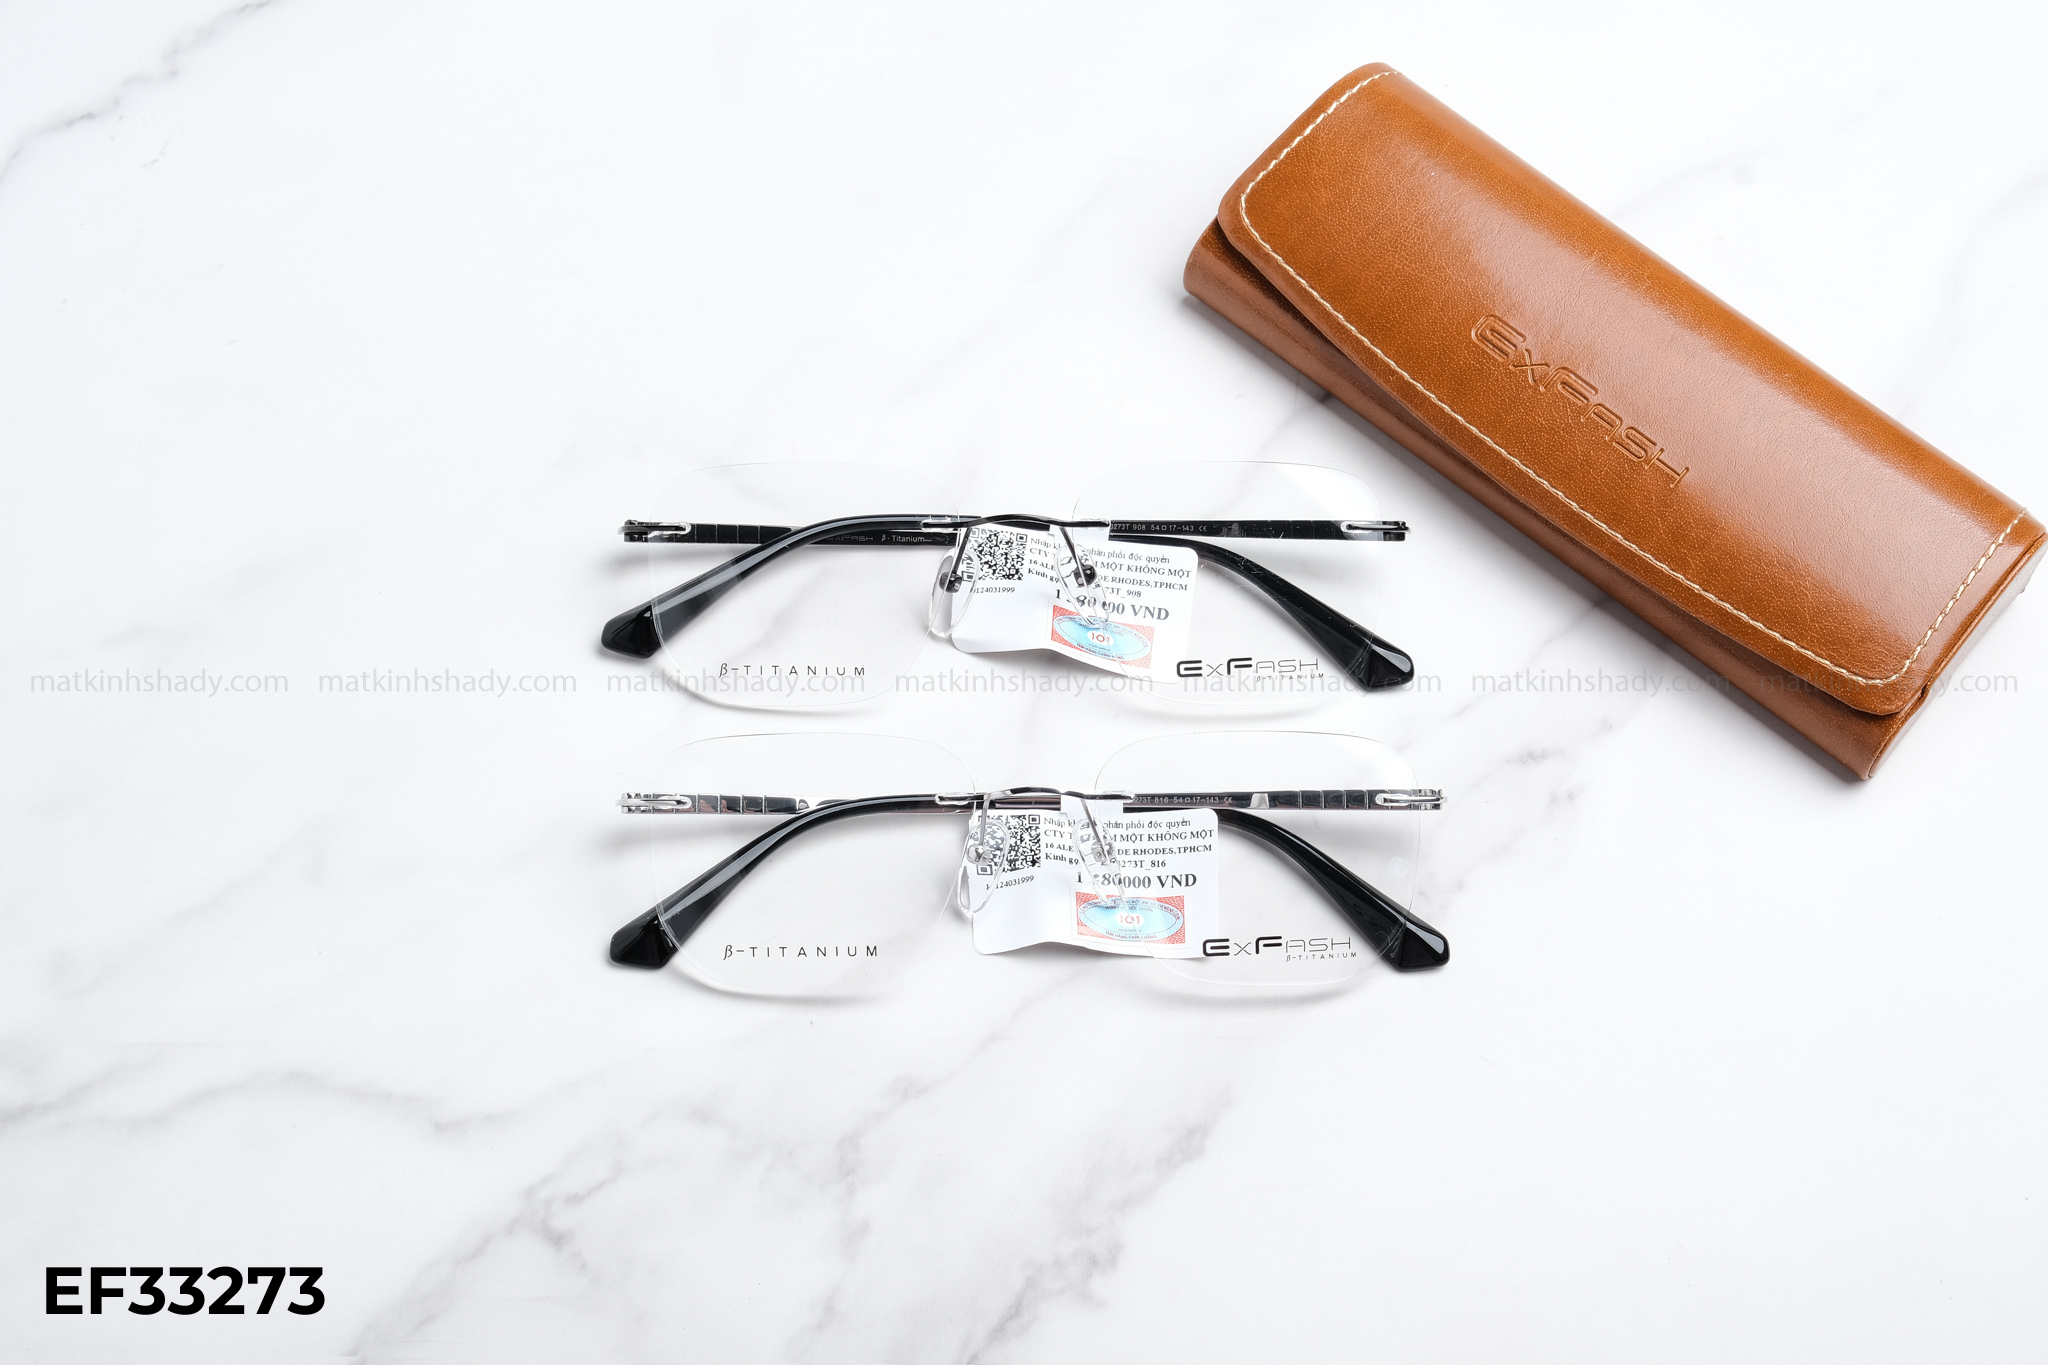  Exfash Eyewear - Glasses - EF33273 